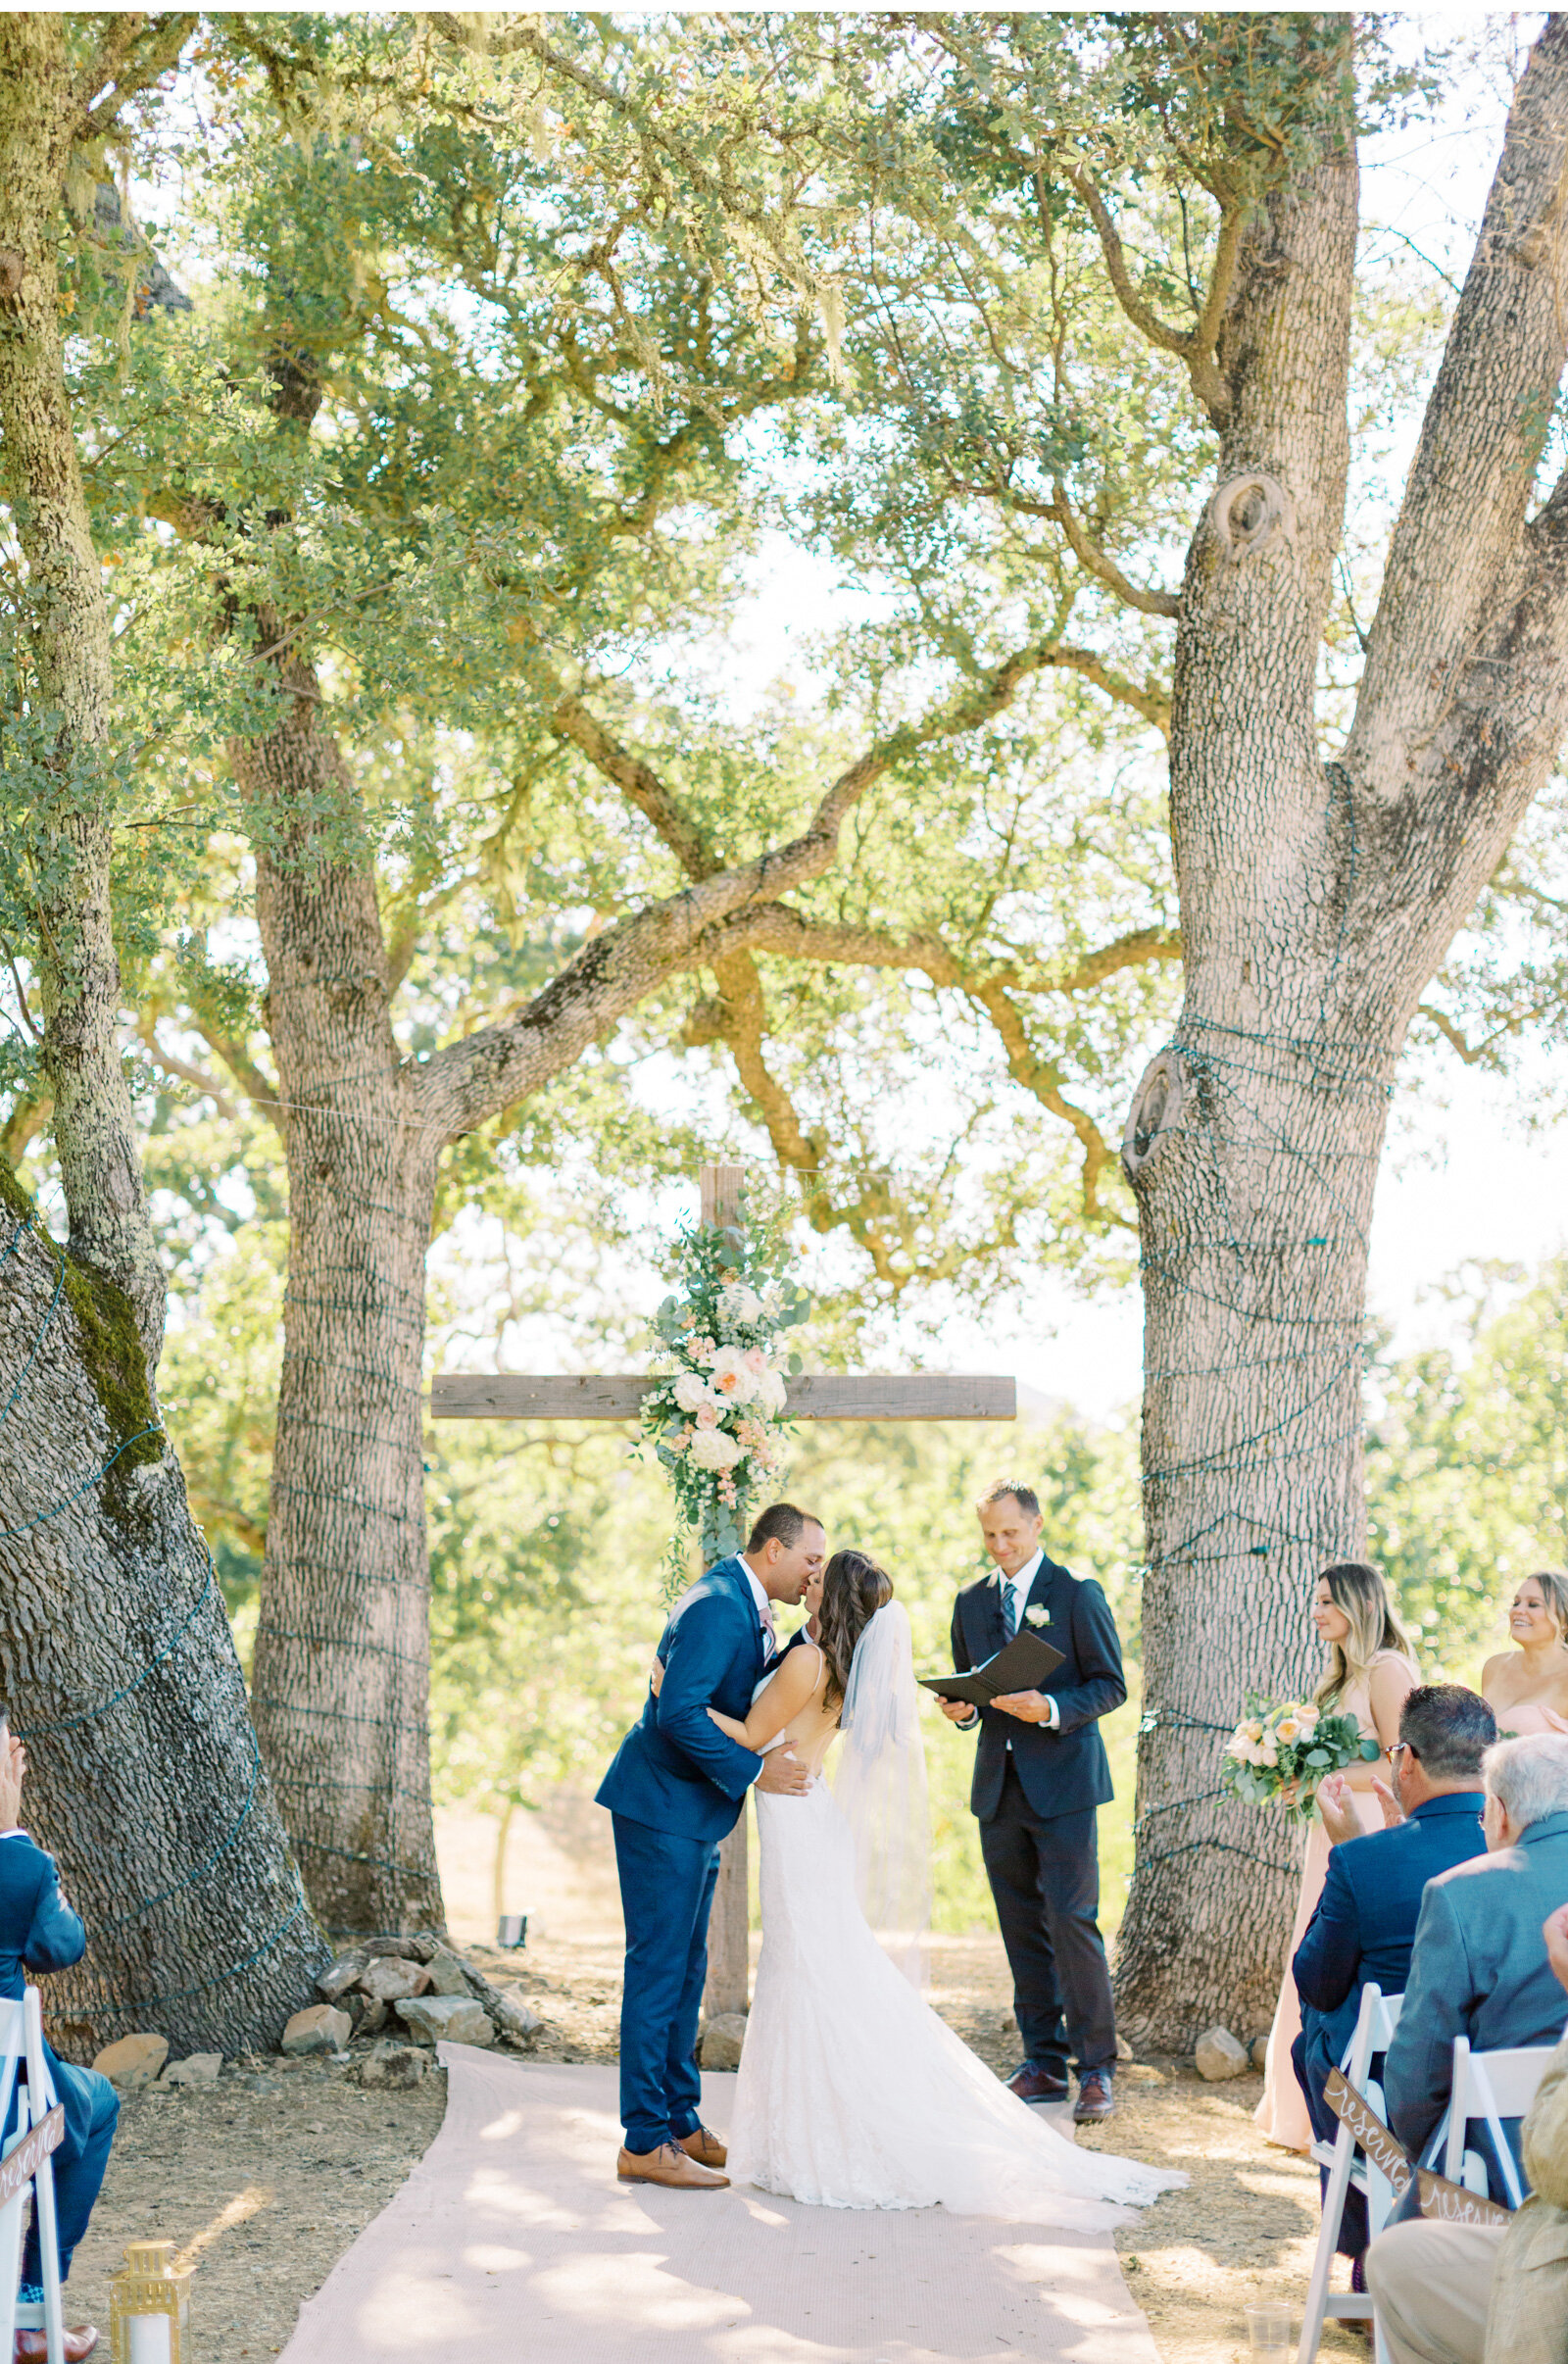 Southern-California-Weddings-Outdoor-wedding-Ceremonies-Al-Fresco-Malibu-Wedding-Natalie-Schutt-photography_01.jpg